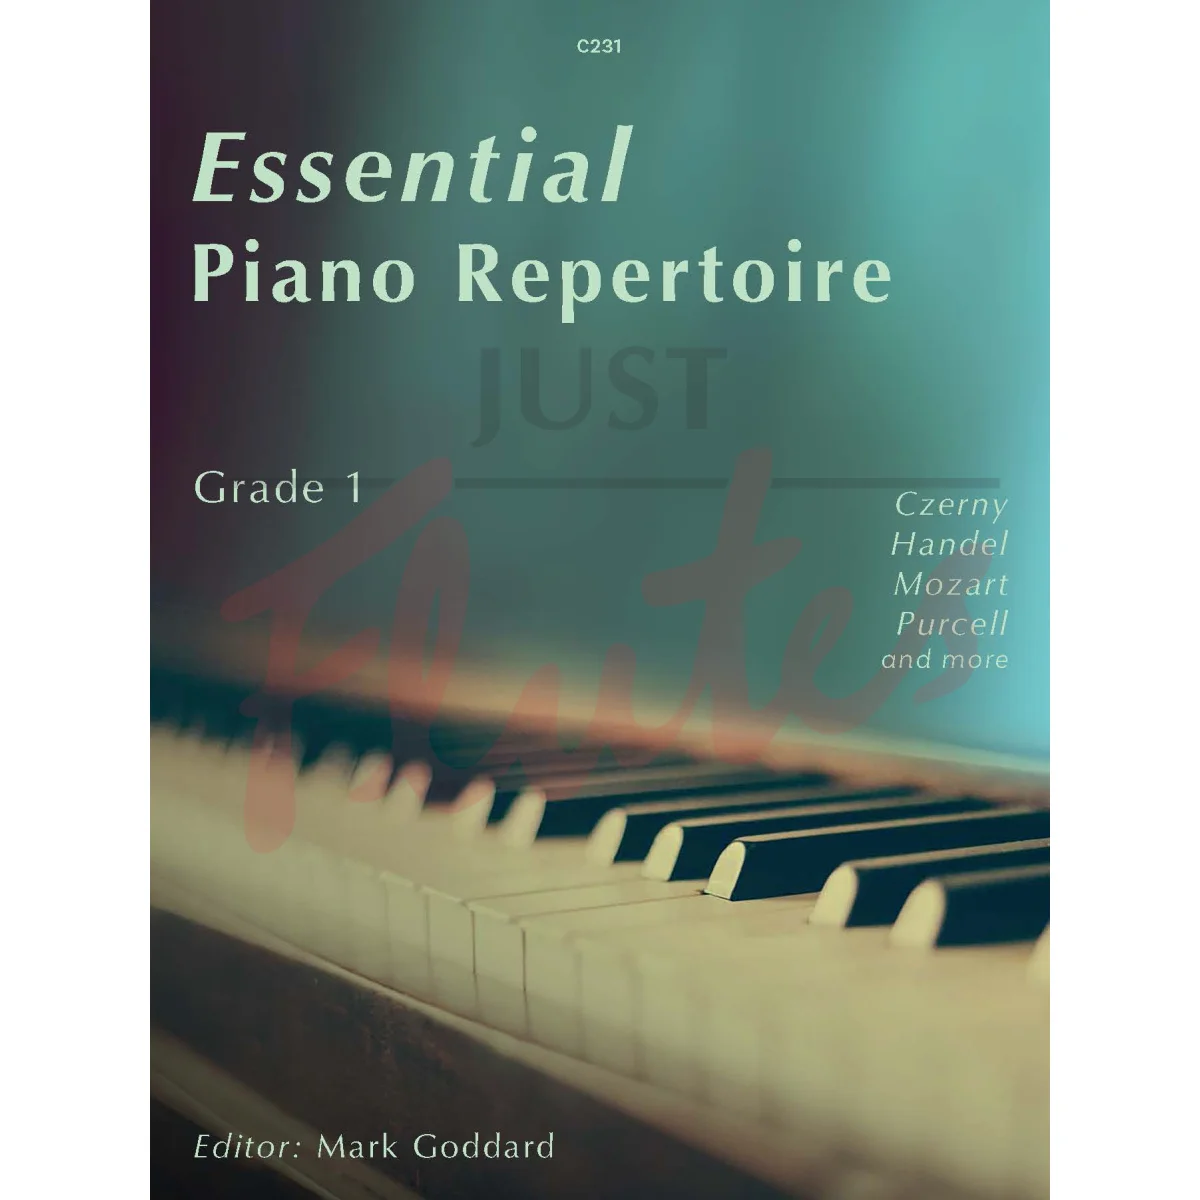 Essential Piano Repertoire: Grade 1